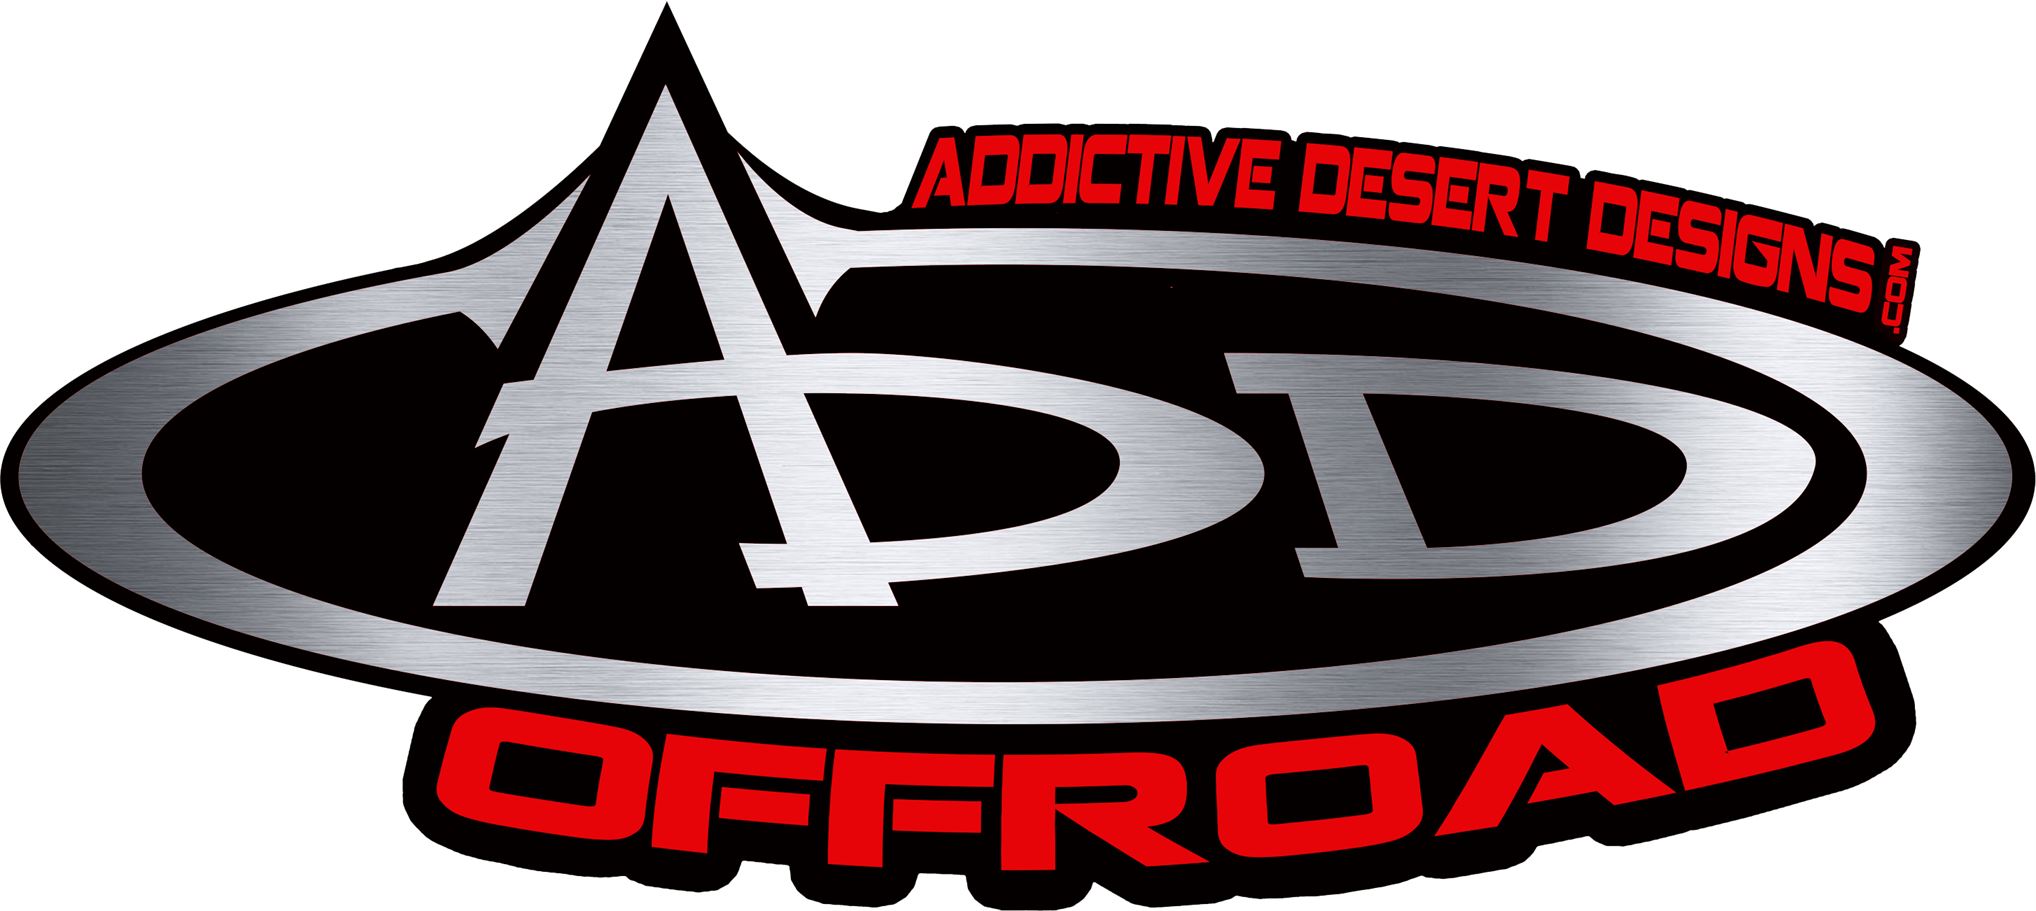 Addictive Desert Designs (ADD) Logo